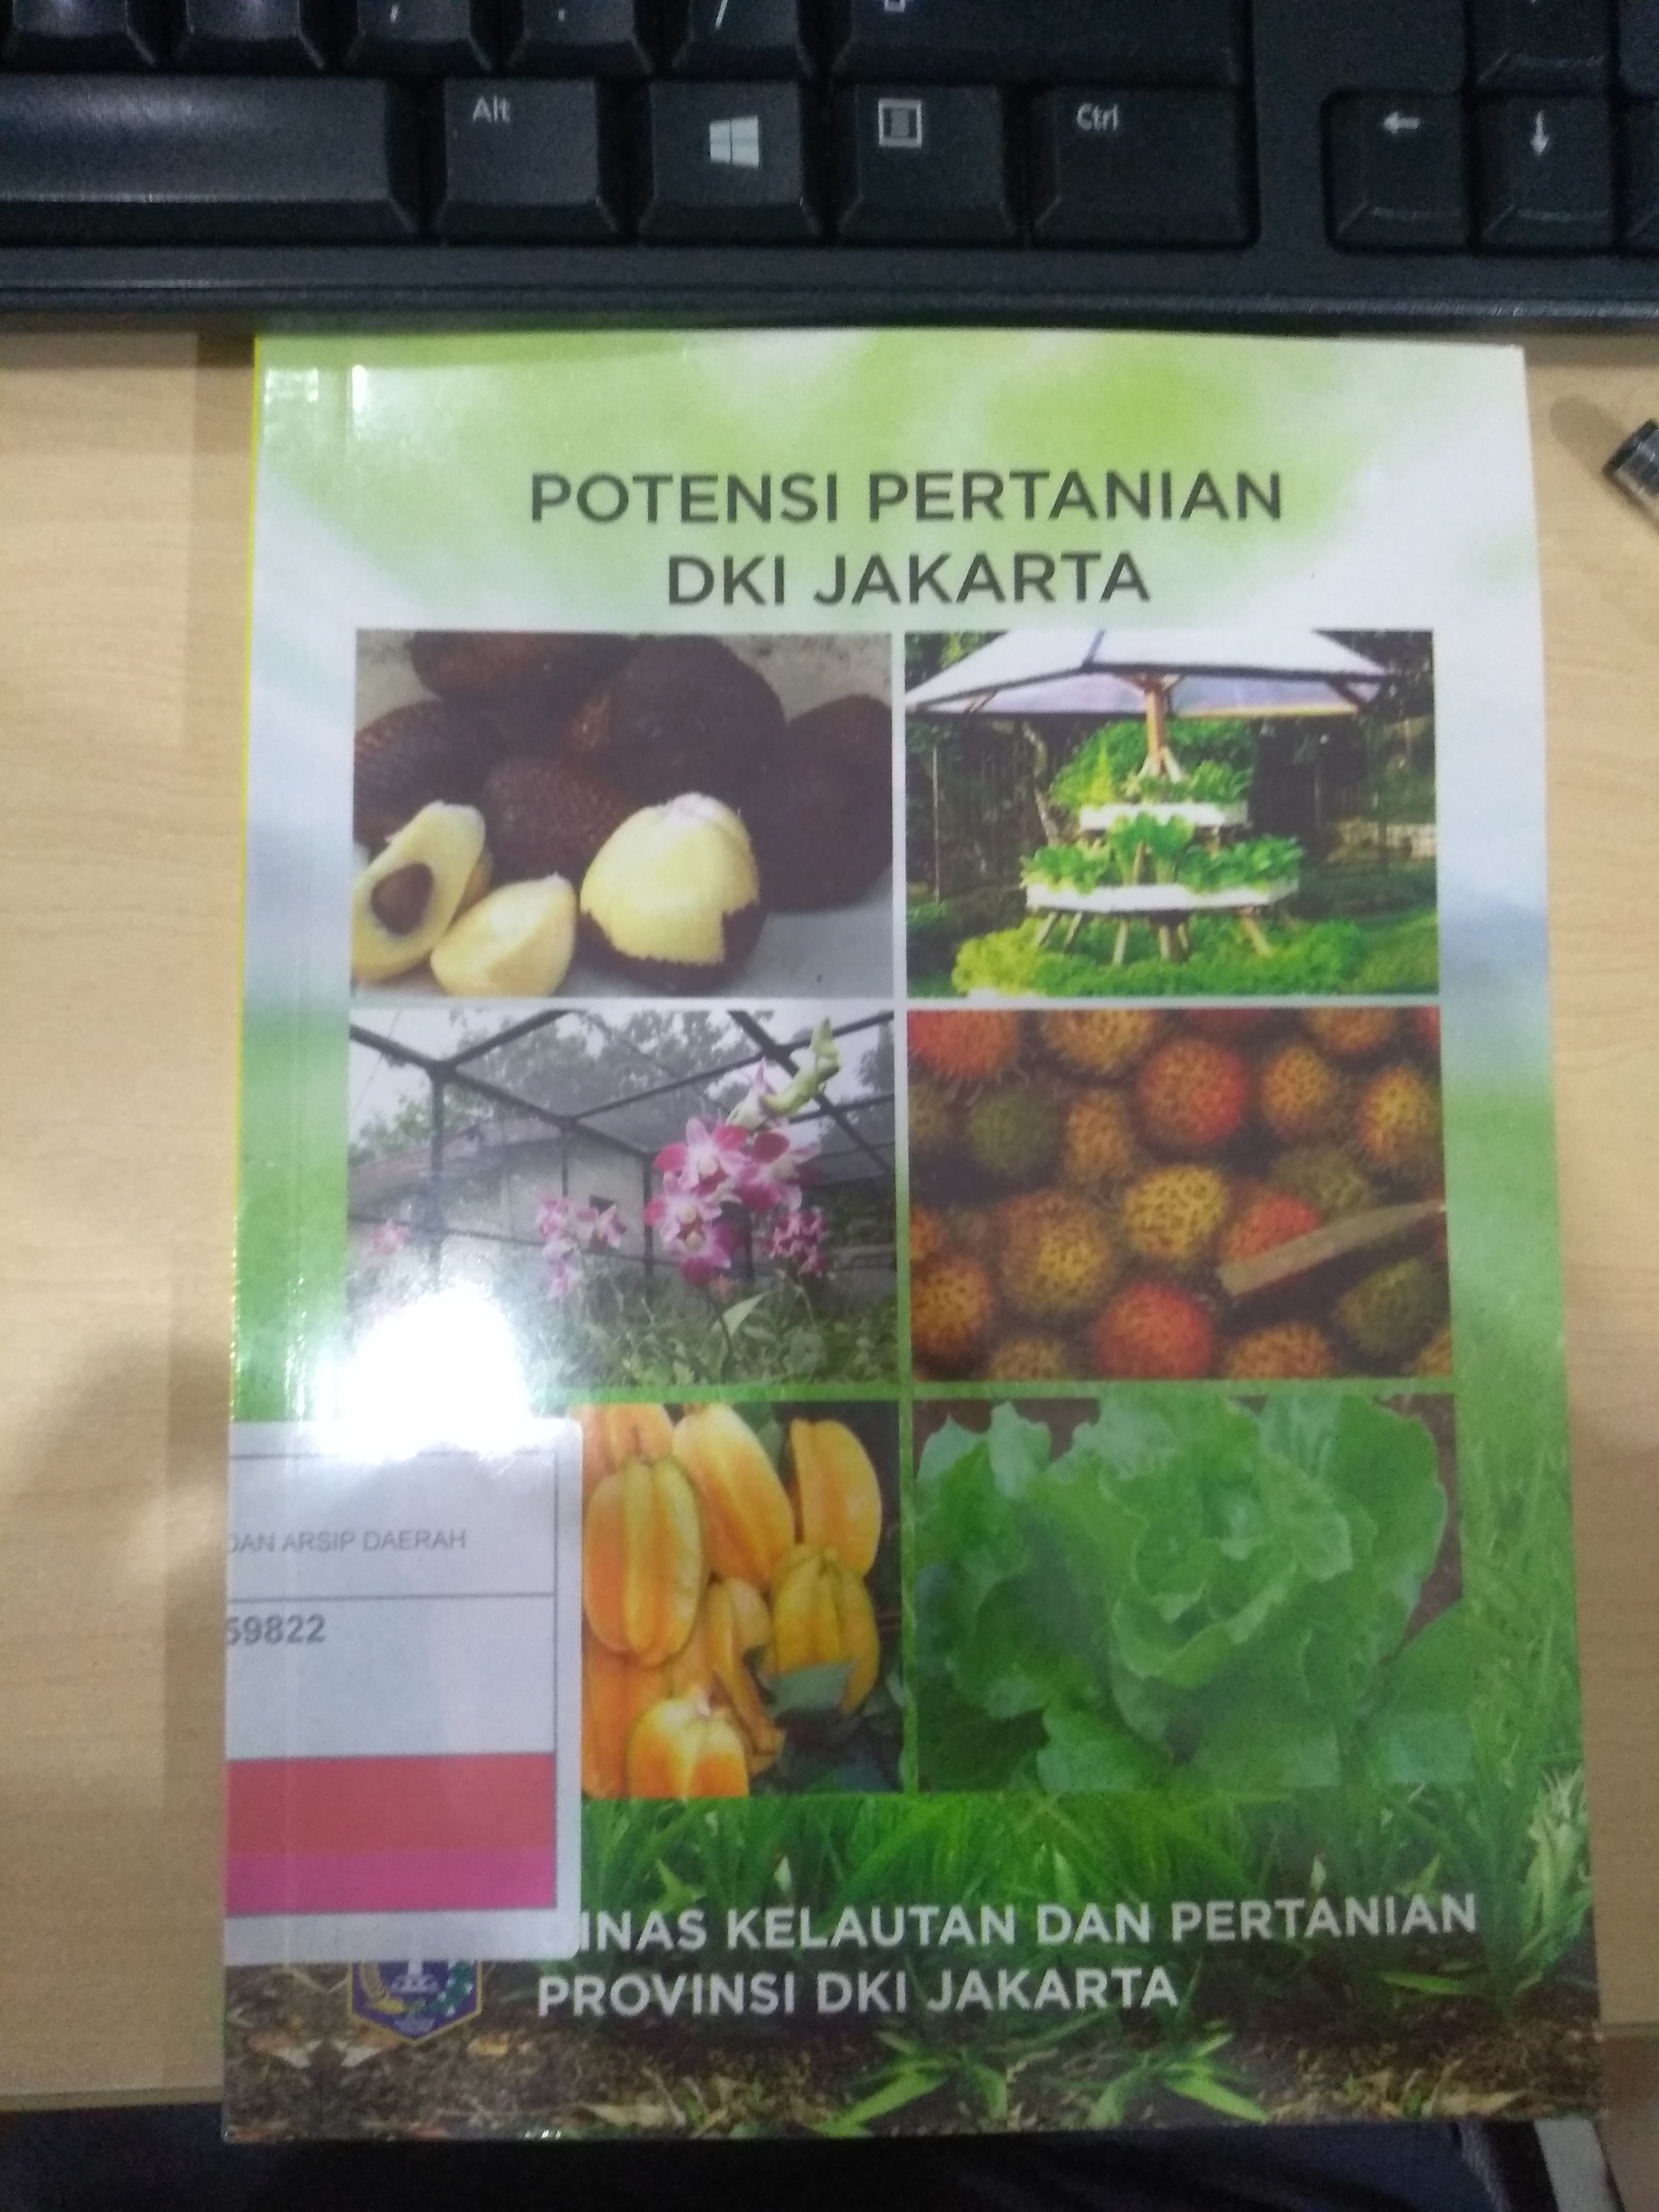 Potensi Pertanian DKI Jakarta